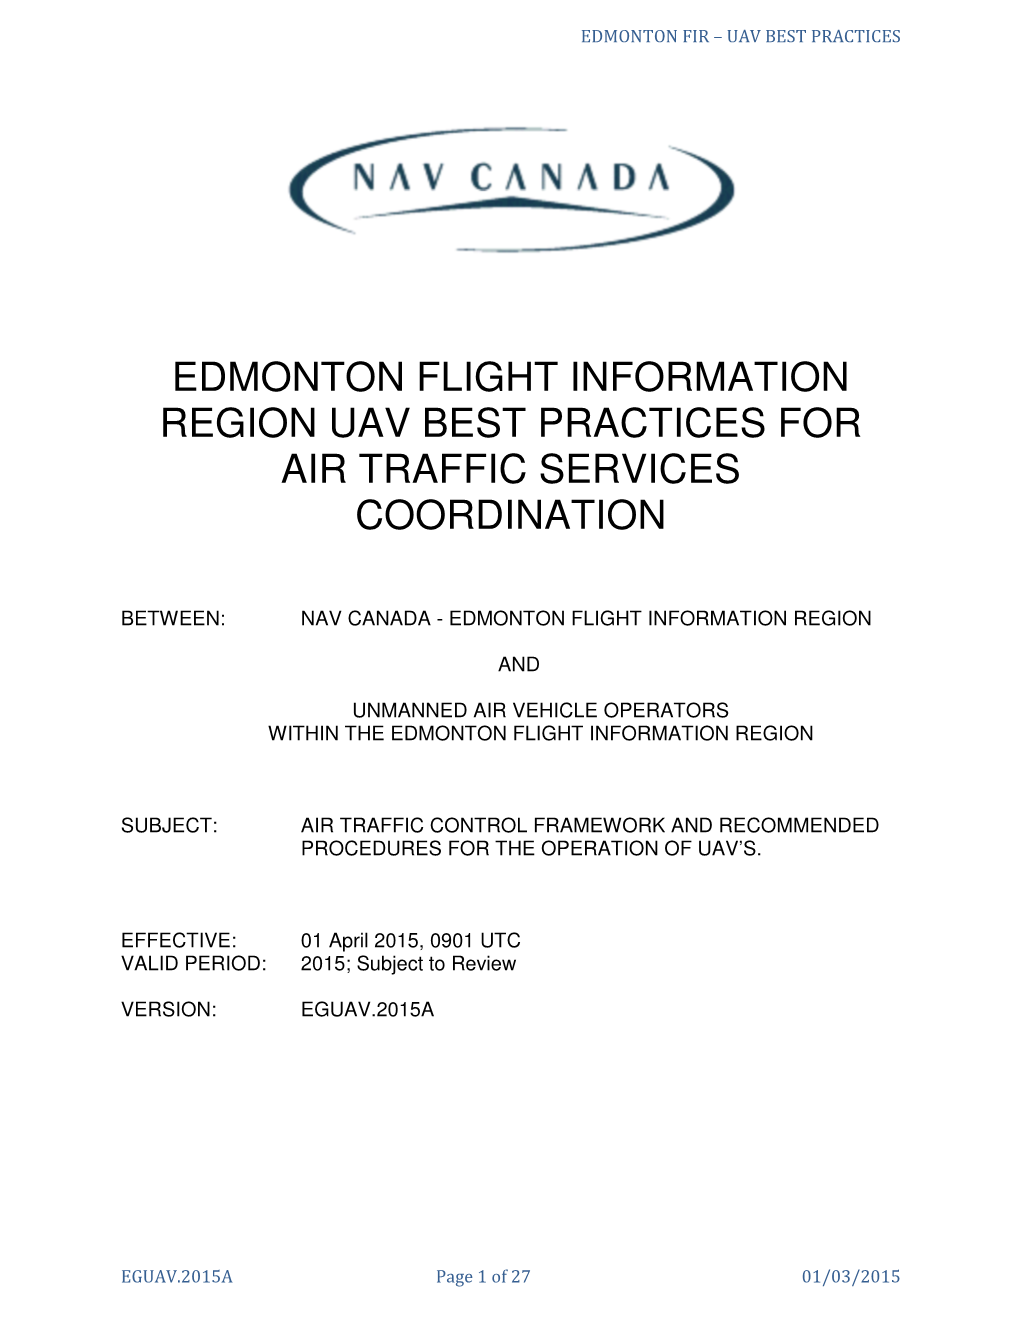 Edmonton Flight Information Region Uav Best Practices for Air Traffic Services Coordination